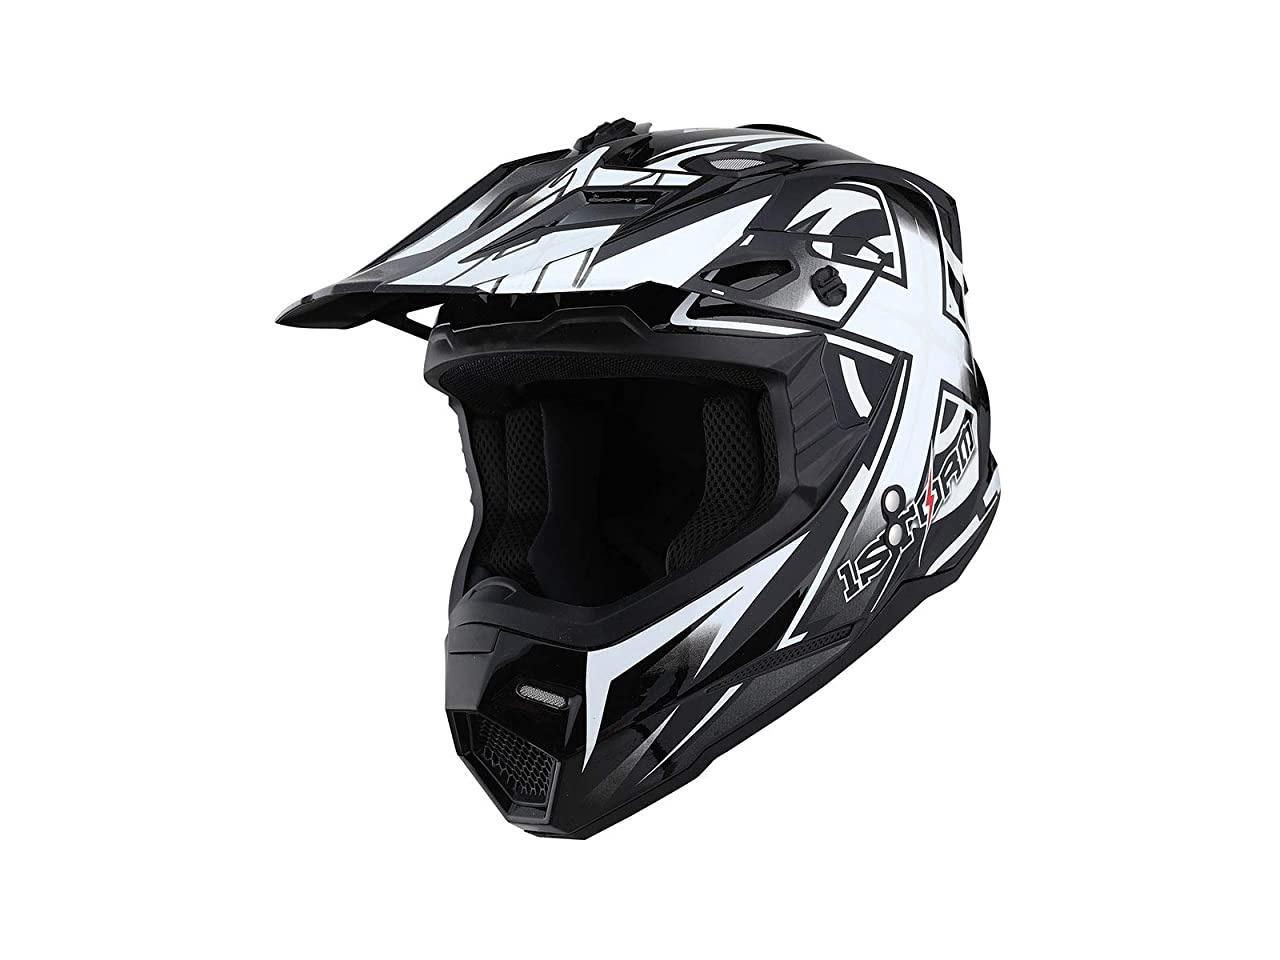 Motocross MX BMX ATV Dirt Bike Ski Snowboard MX Snow Goggles Arrow Glossy Black 